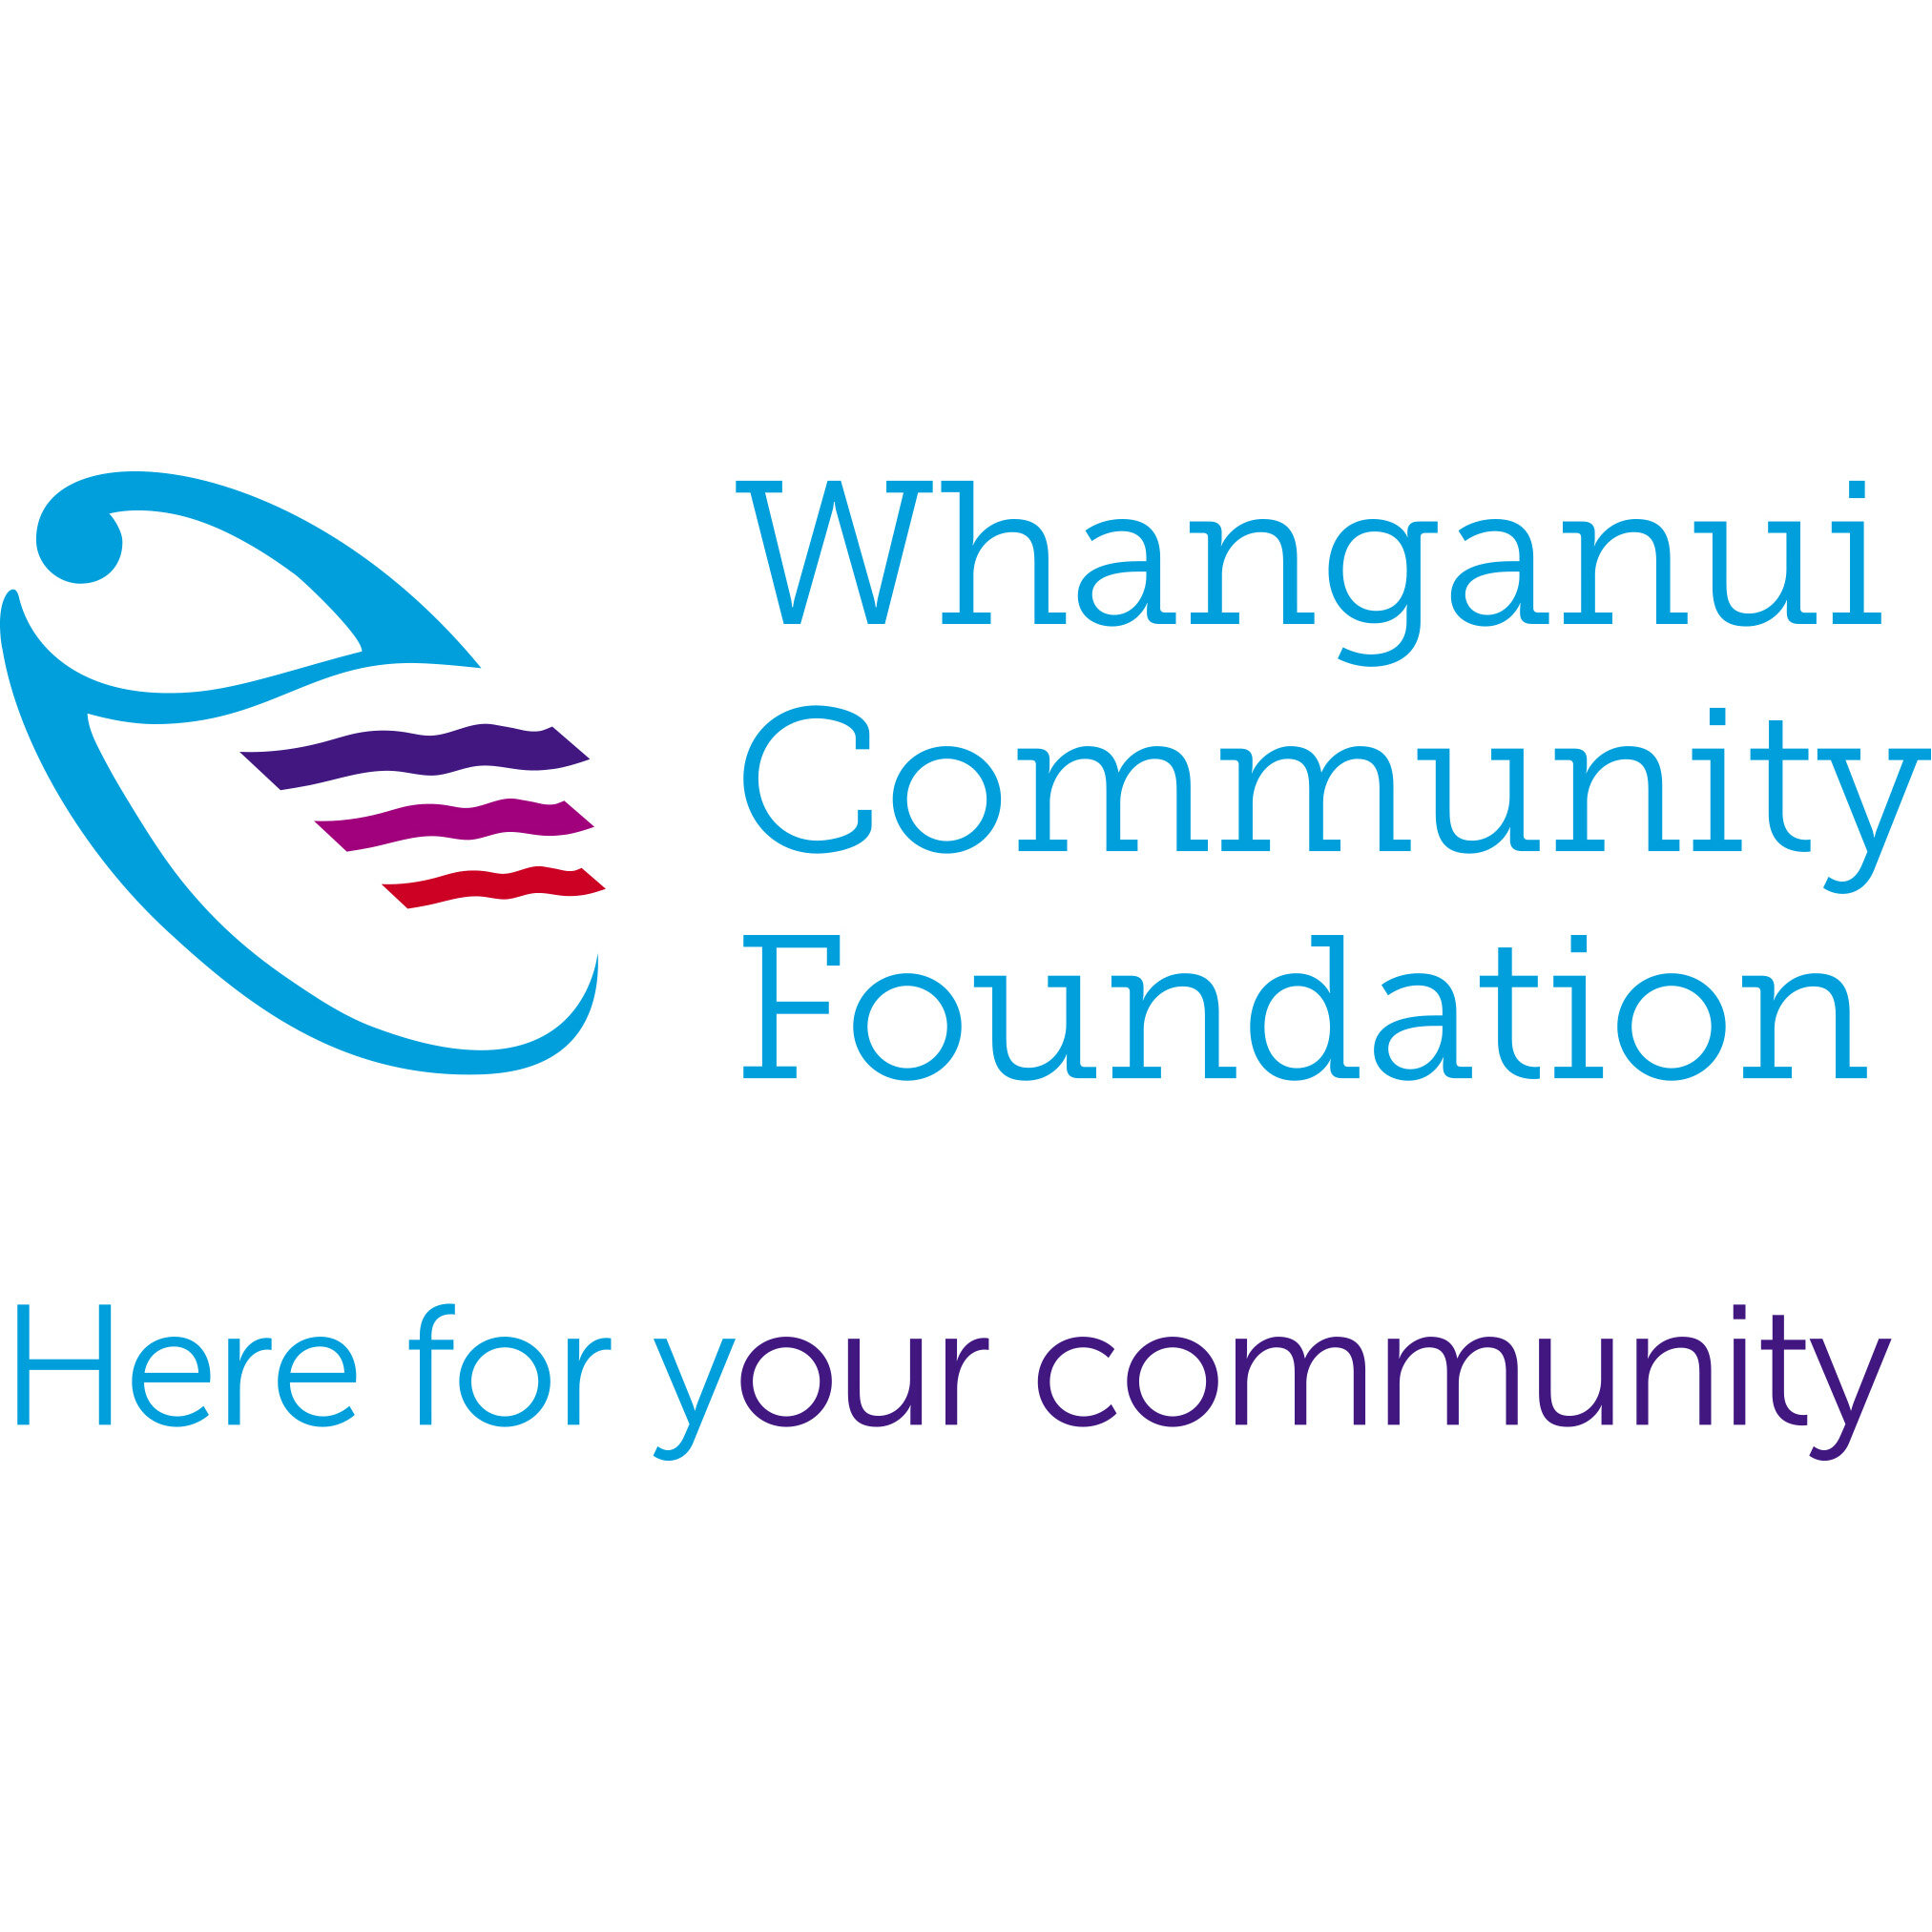 WhanganuiCommunityFoundation.jpg